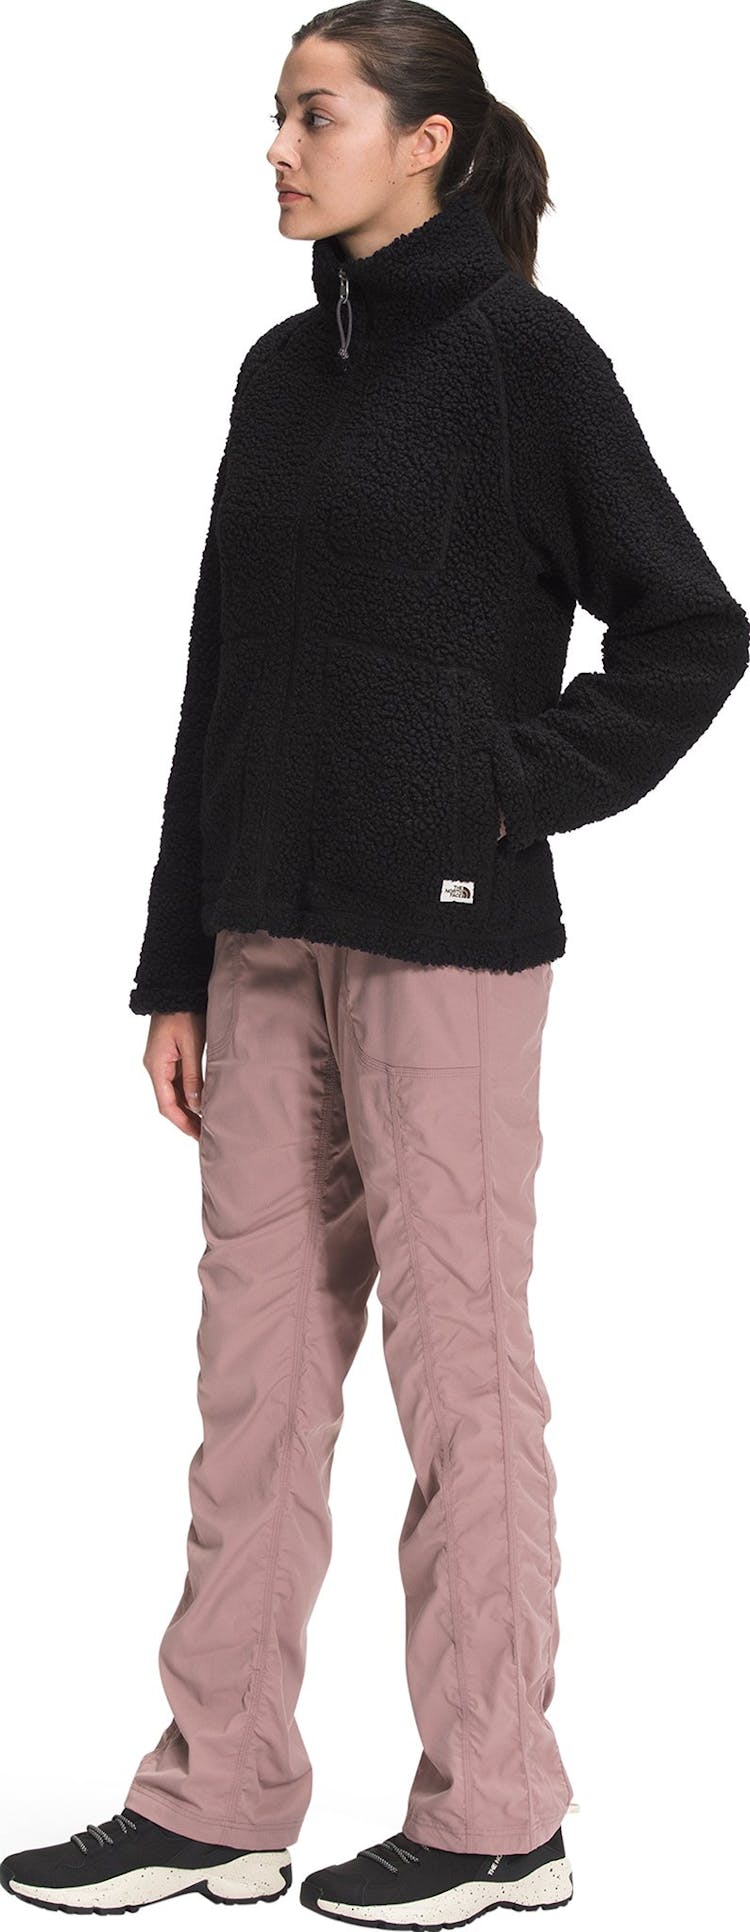 Product gallery image number 2 for product Ridge Fleece Full-Zip Jacket - Women’s